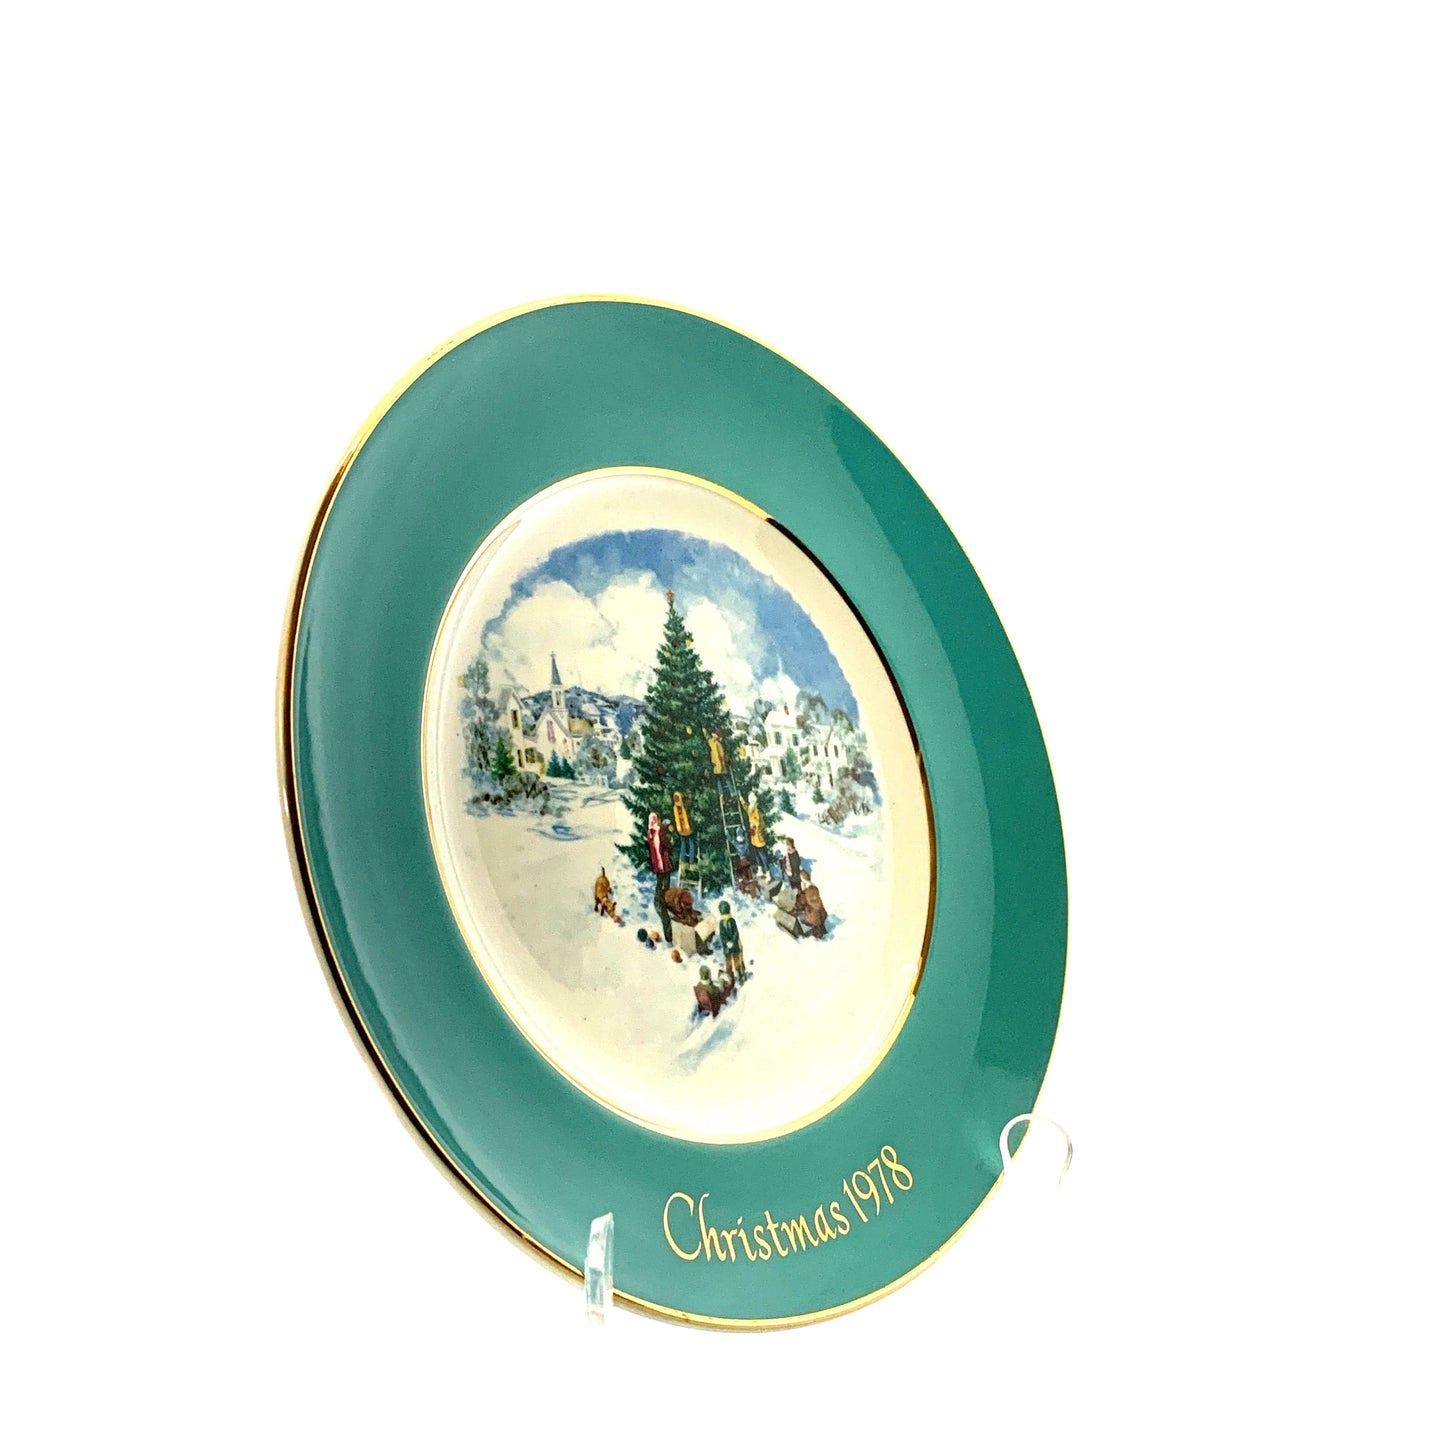 Vintage Avon Christmas Plate Series Sixth Edition “Trimming The Tree” 1978